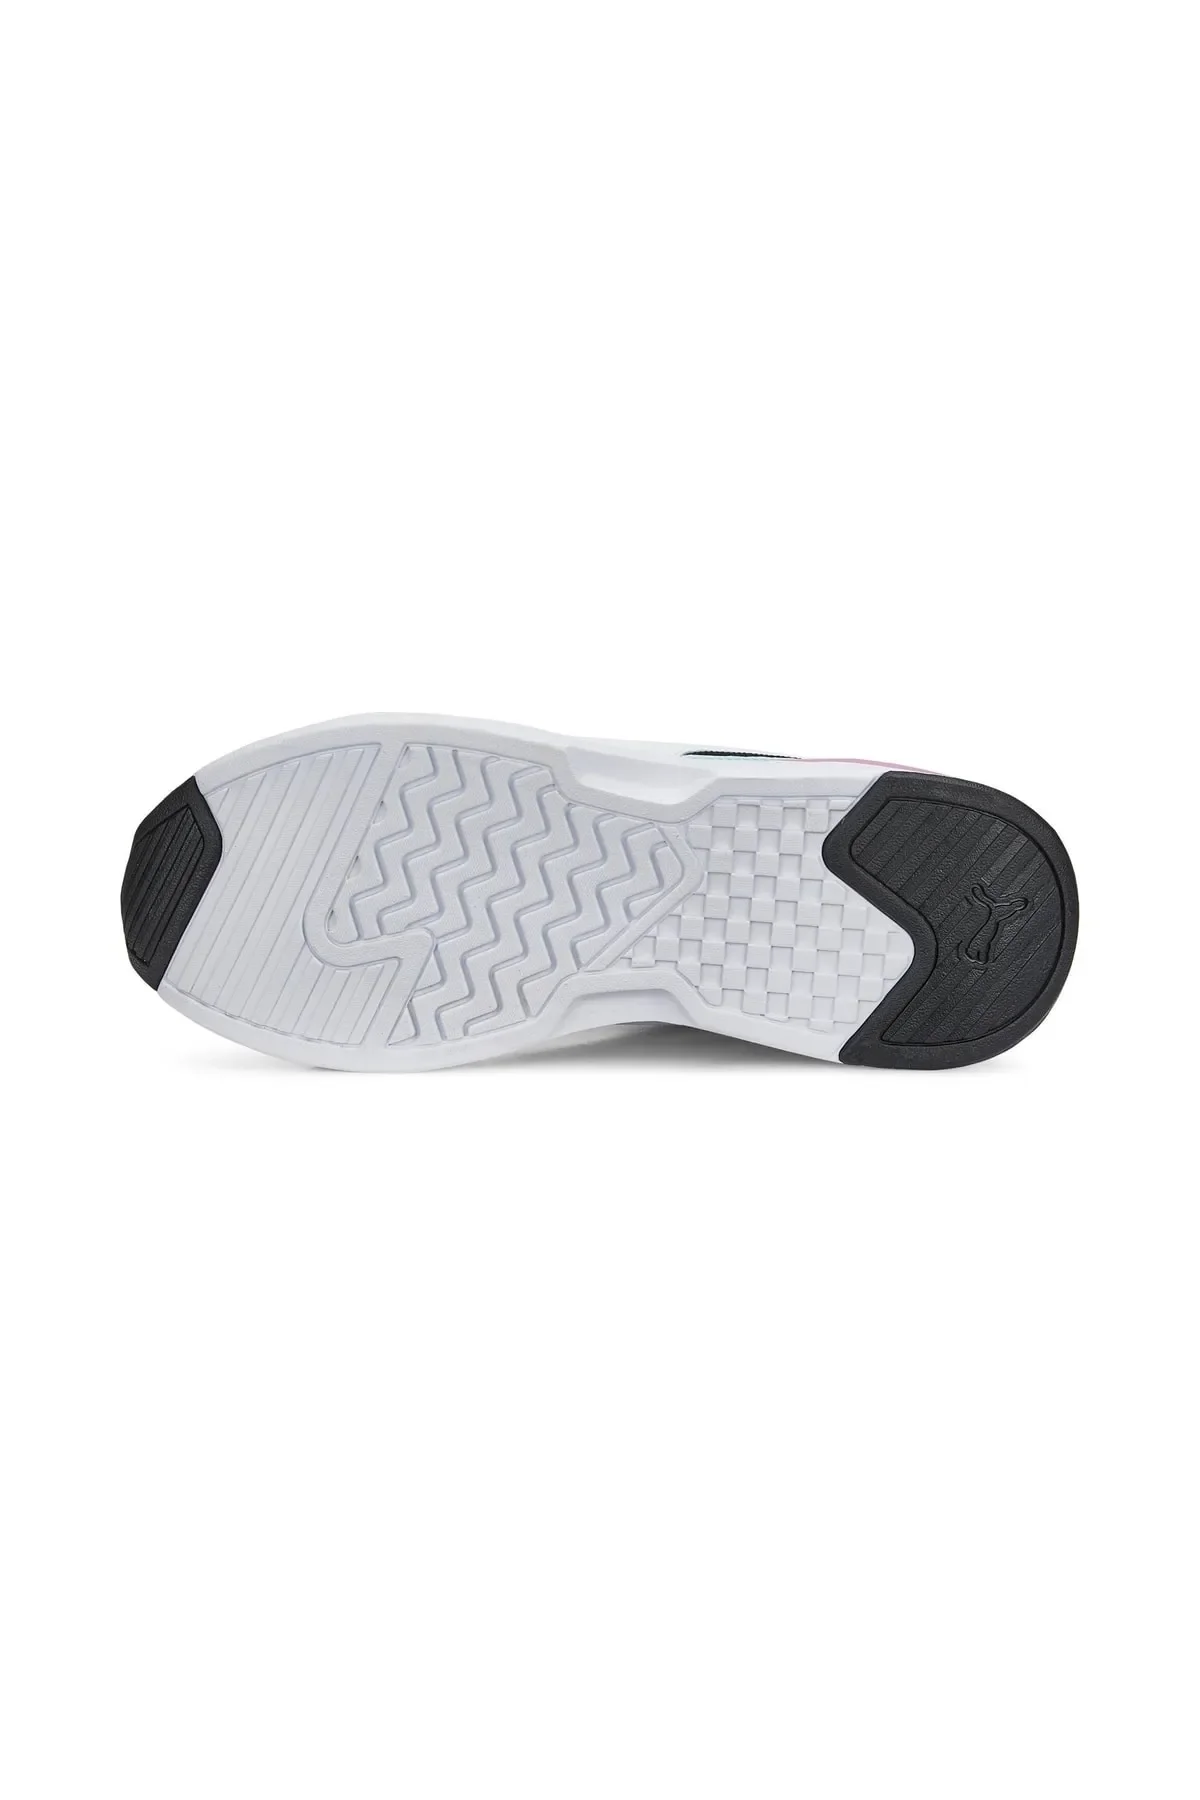 X-Ray Speed Lite - Kadın Sneaker Ayakkabı 384639 -Siyah - 12